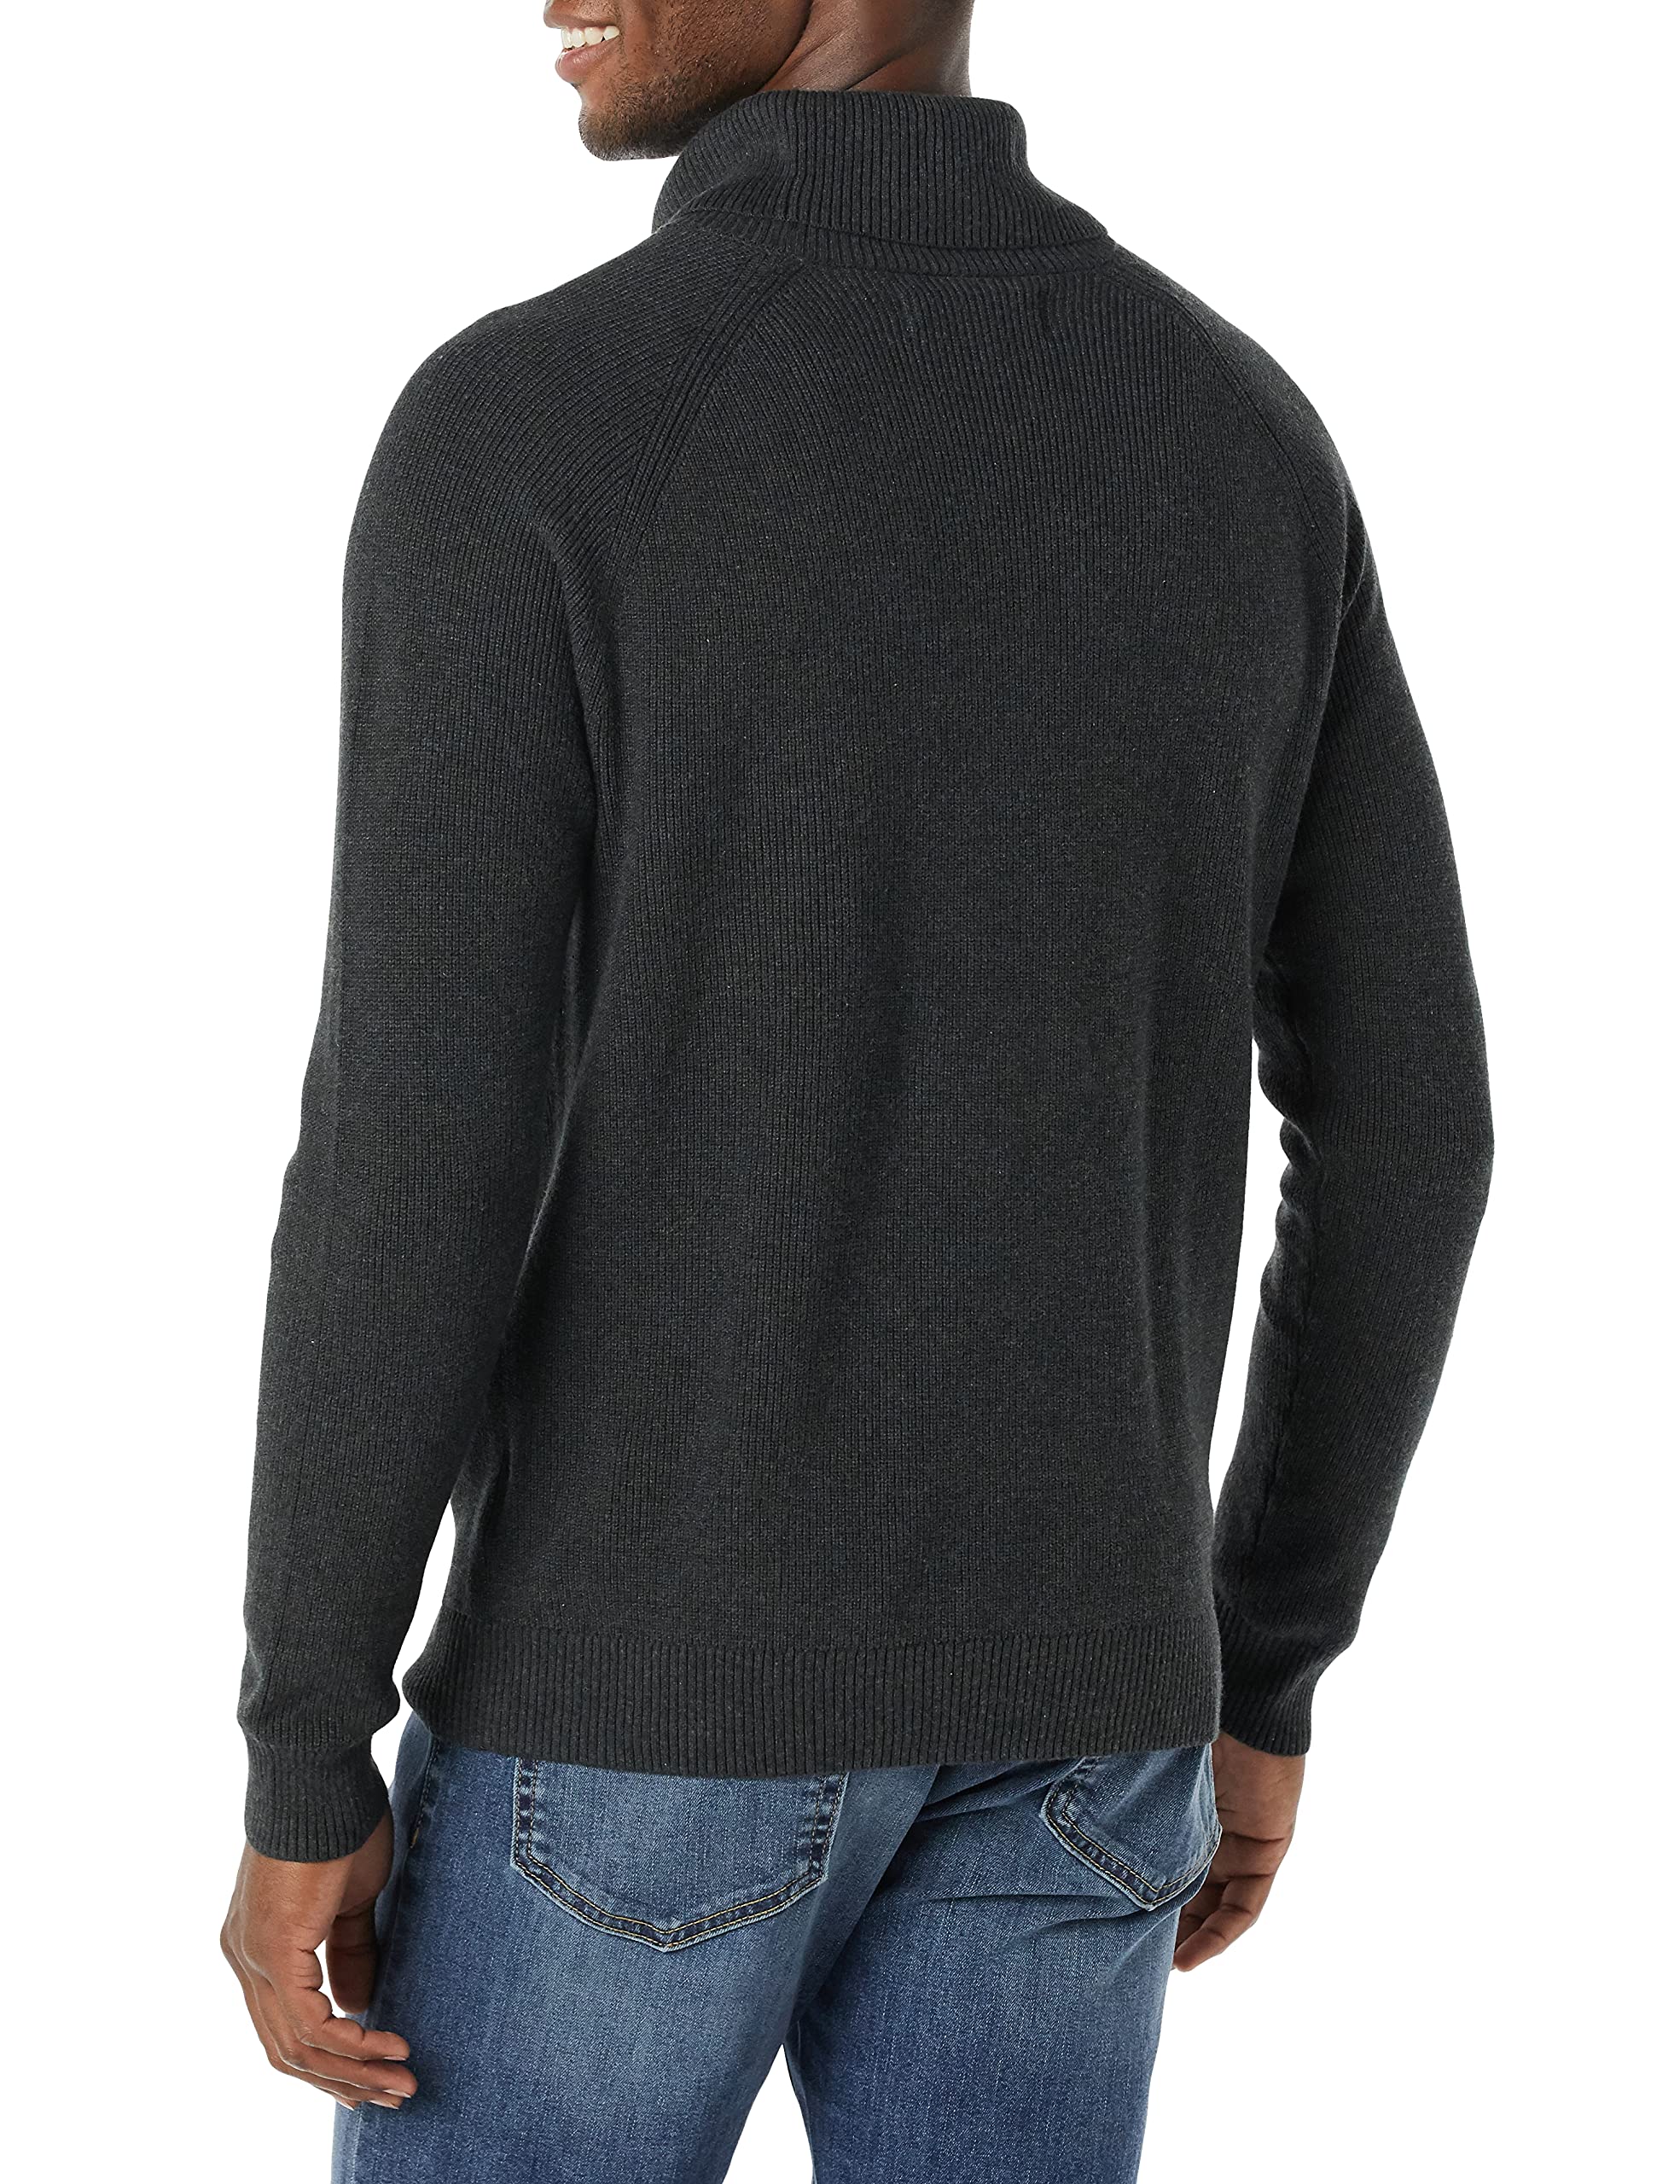 Amazon Essentials Men's 100% Cotton Rib Knit Turtleneck Sweater